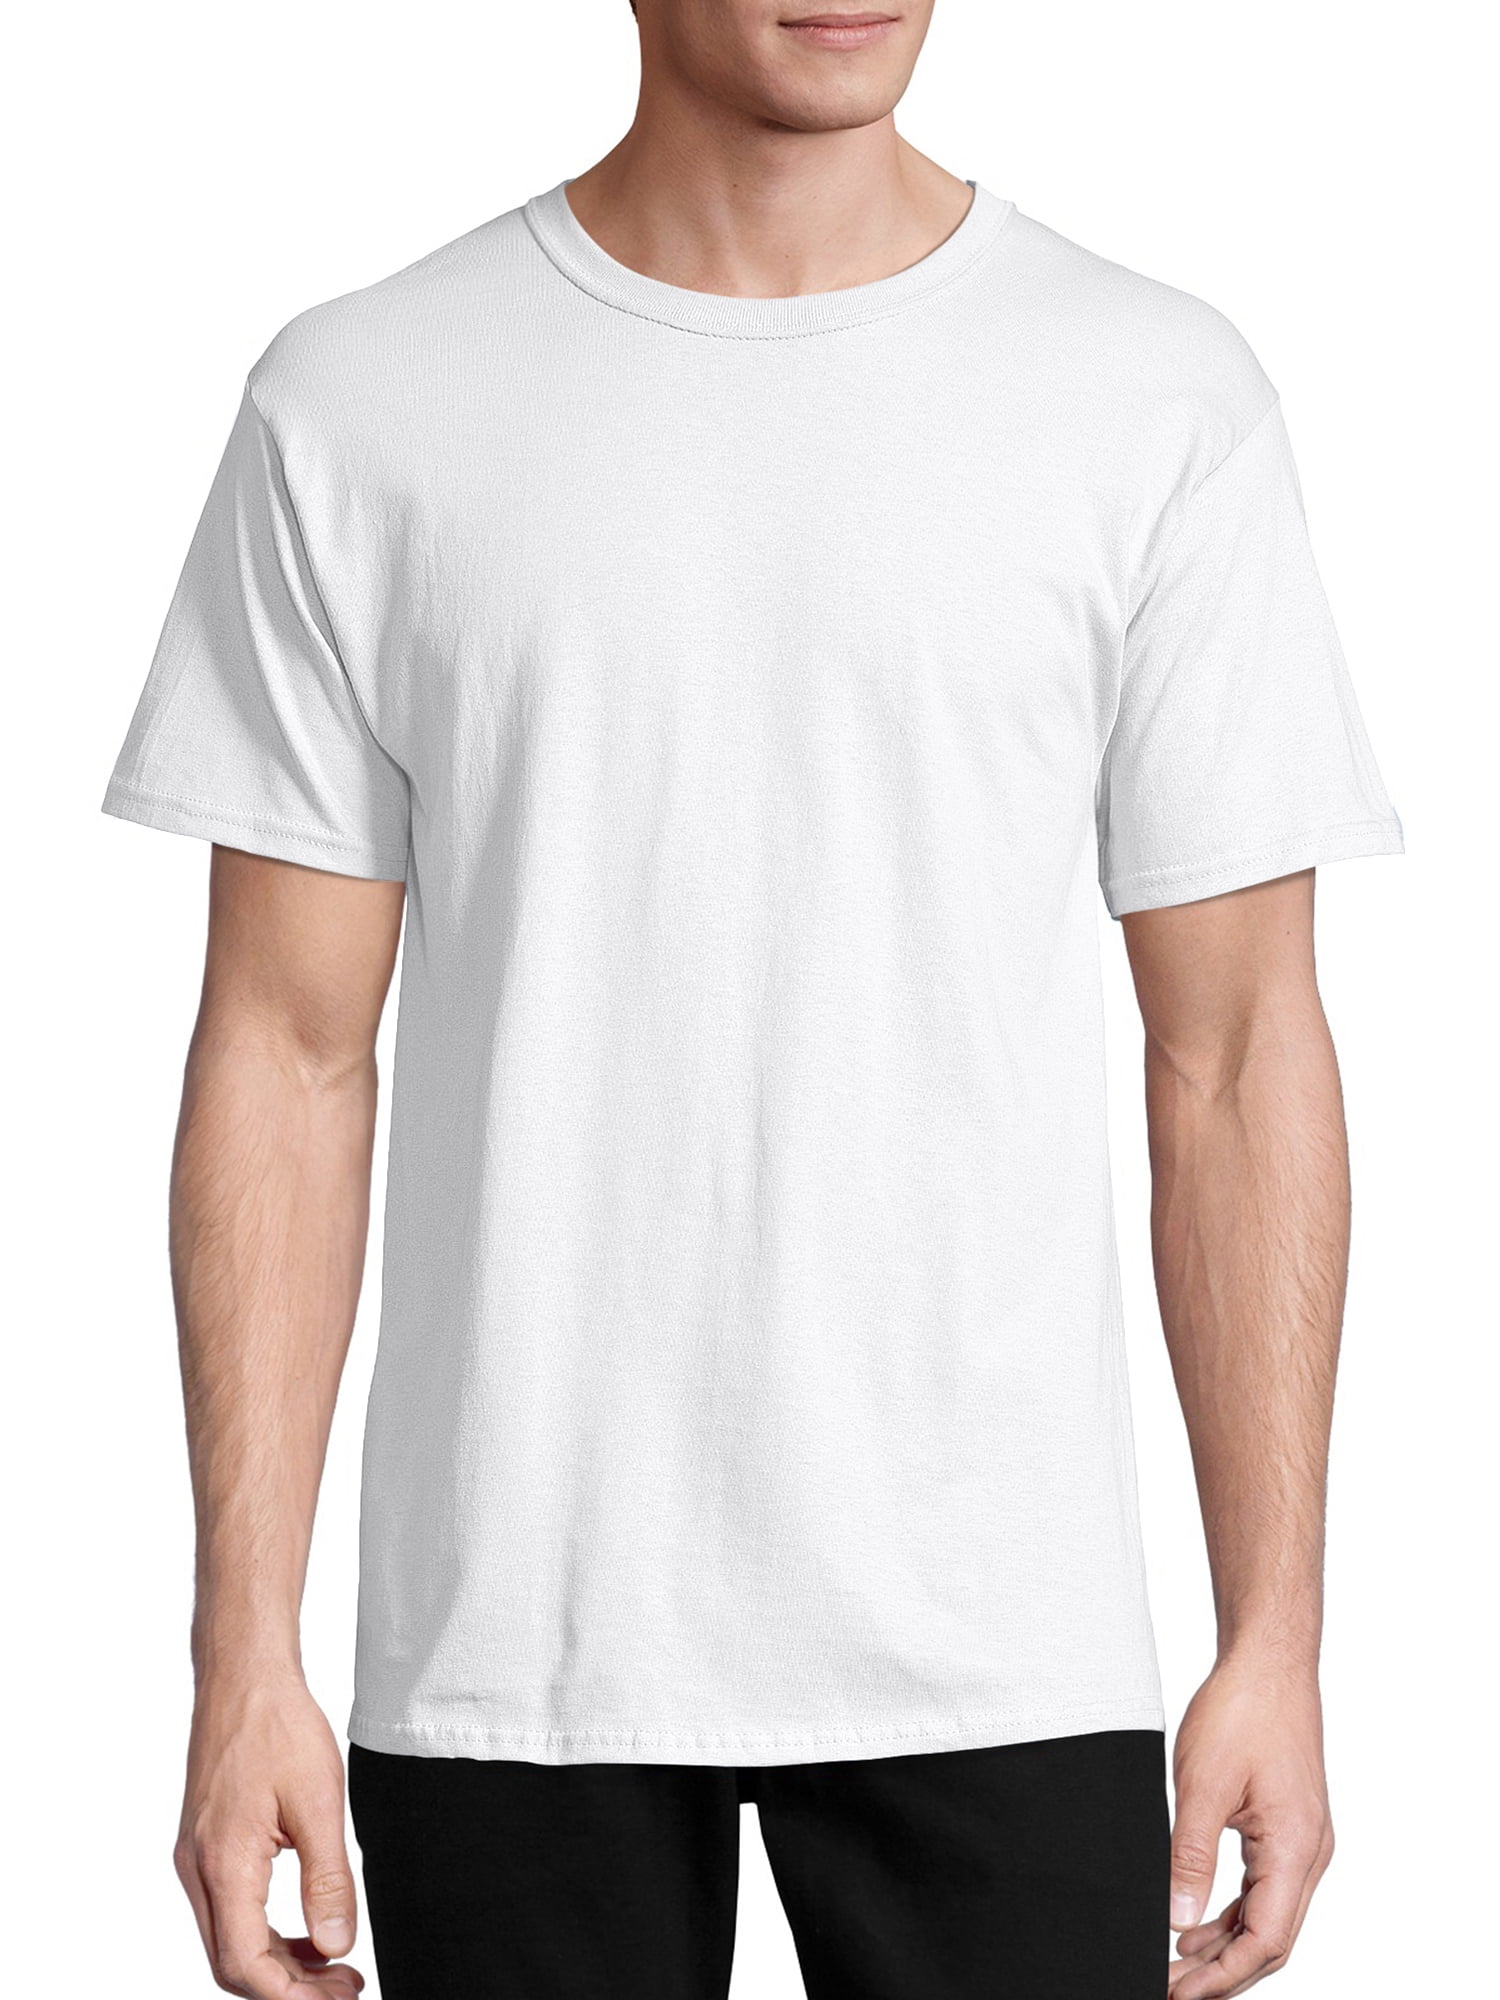 Hanes Men's Comfortsoft Short Sleeve T-shirt, Pack, 42% OFF